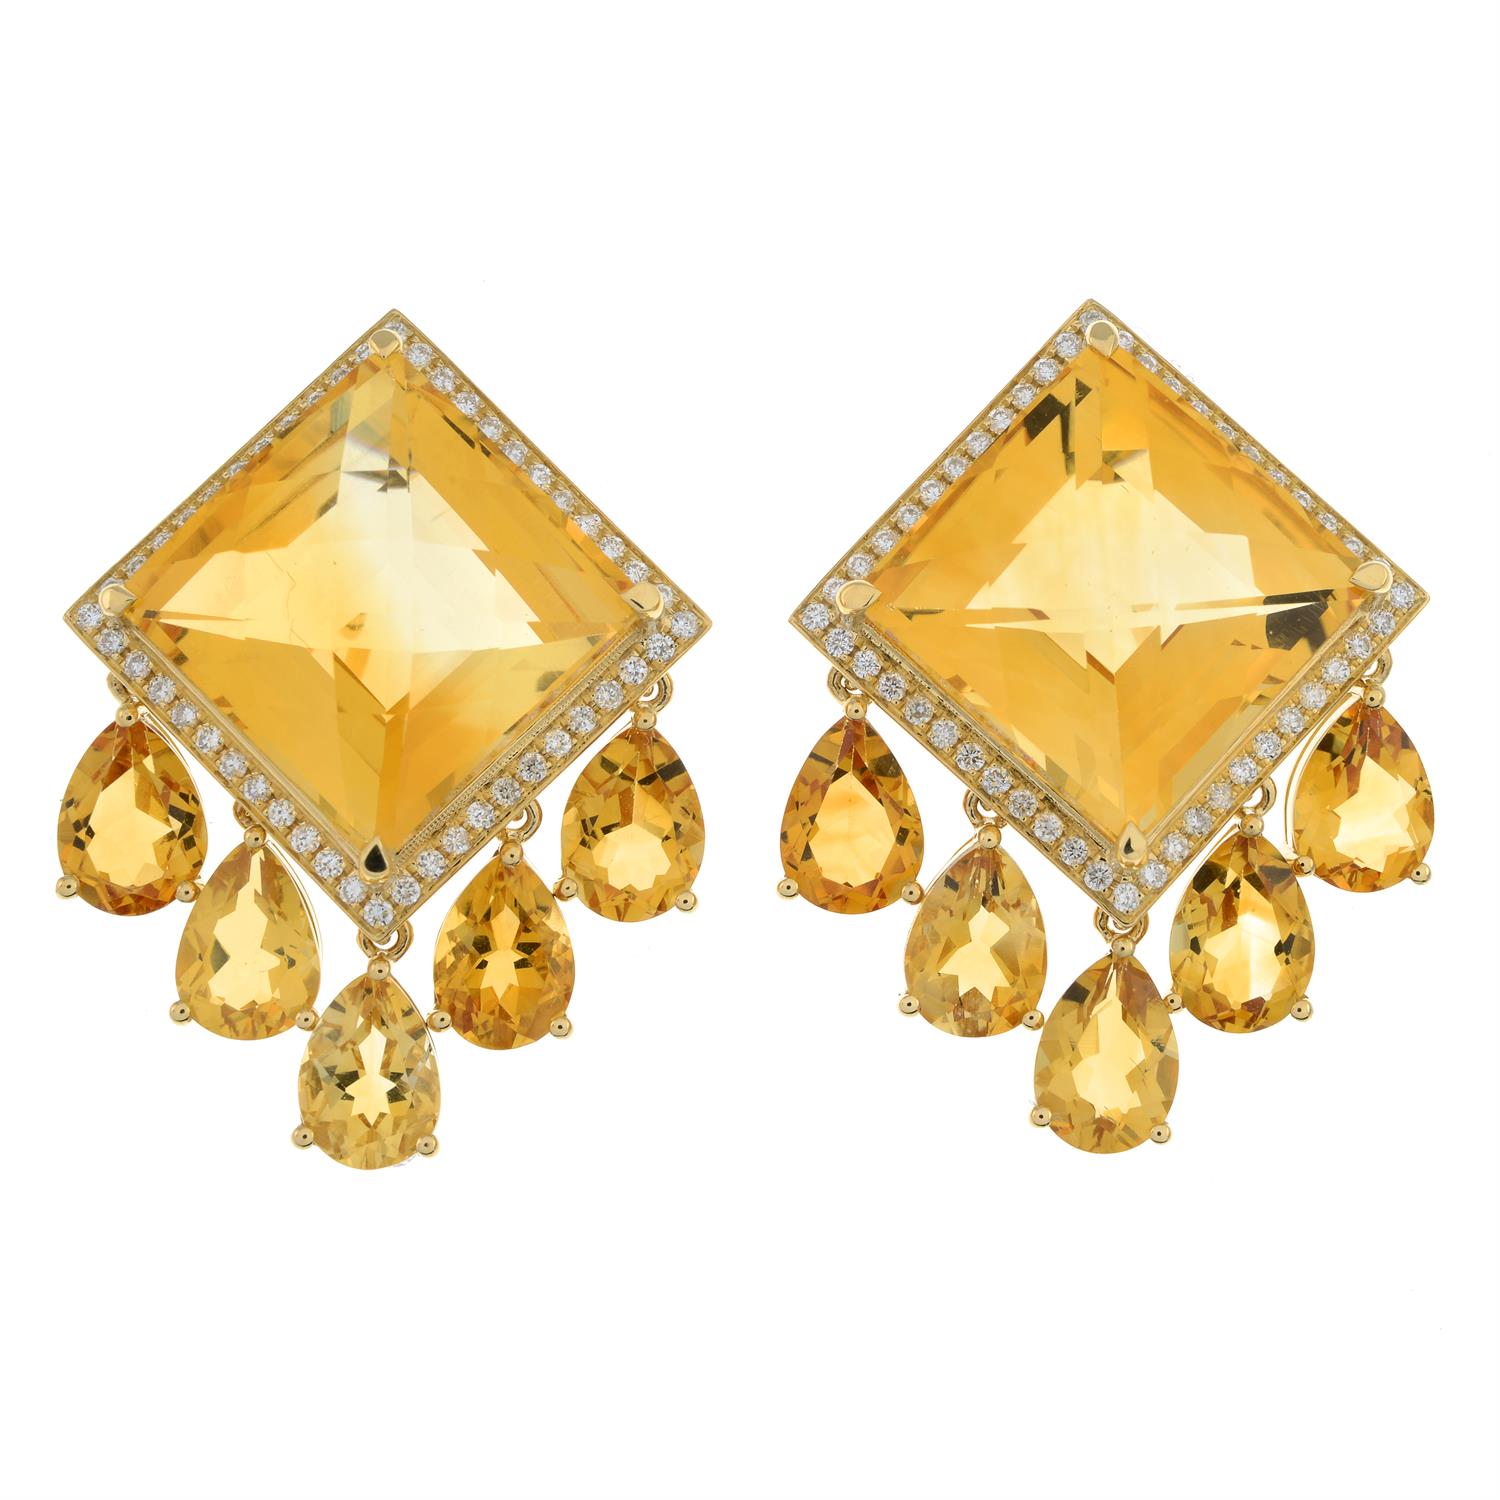 Citrine and diamond earrings - Image 2 of 3